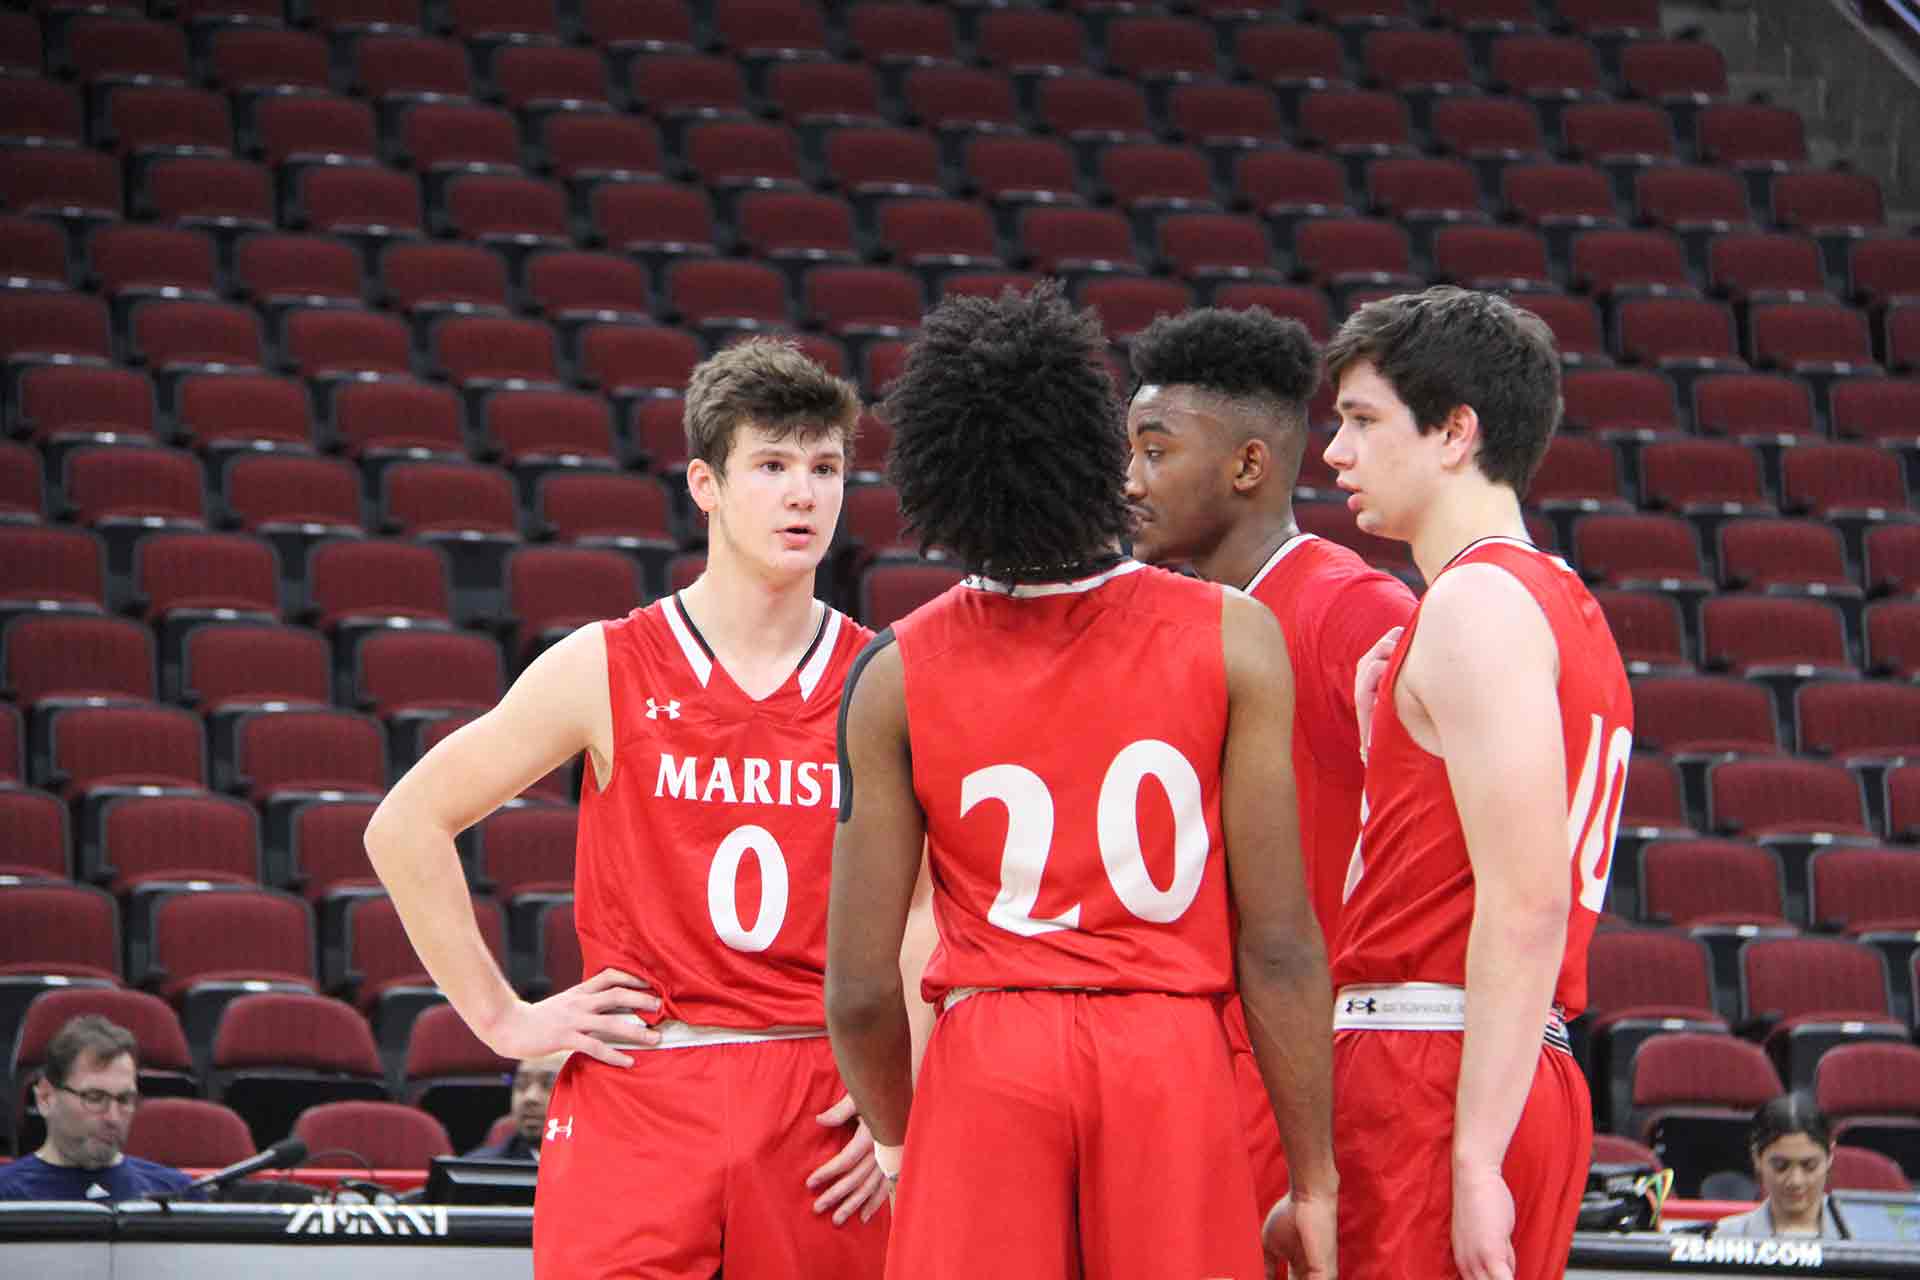 boys-basketball-vs-st-rita-four-marist-players-talking